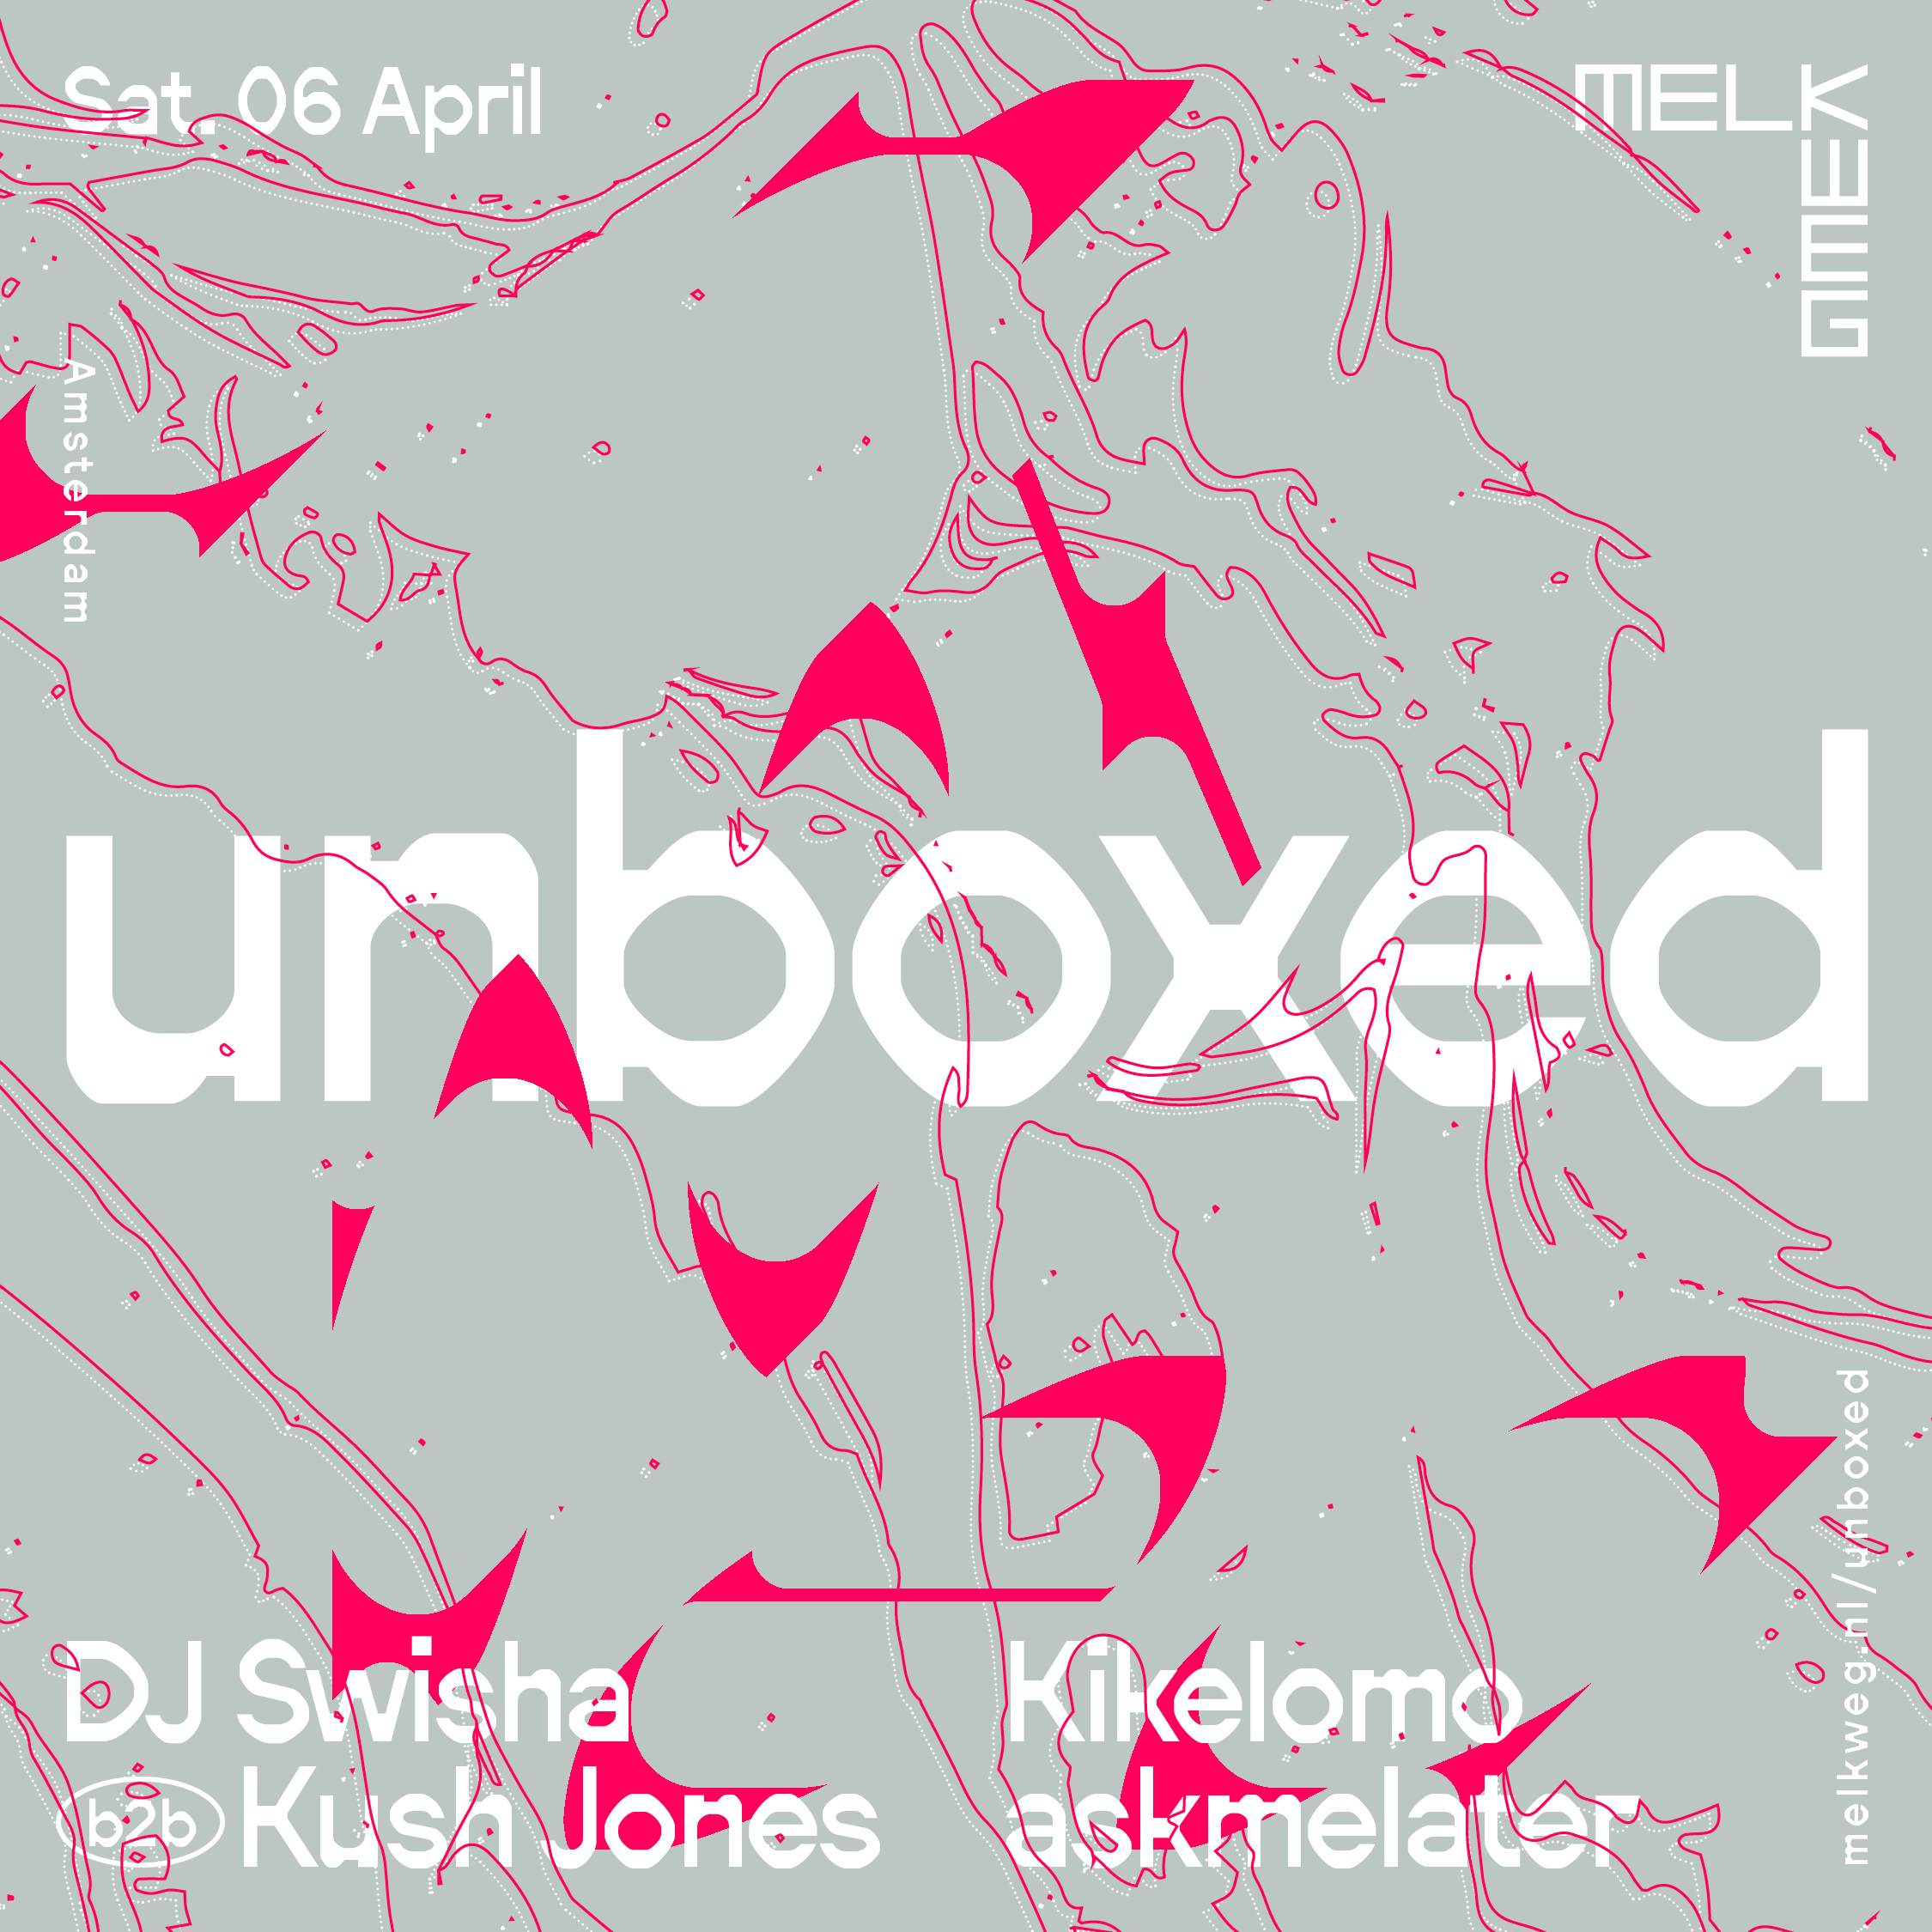 unboxed: DJ SWISHA / Kush Jones / Kikelomo / askmelater - Página frontal